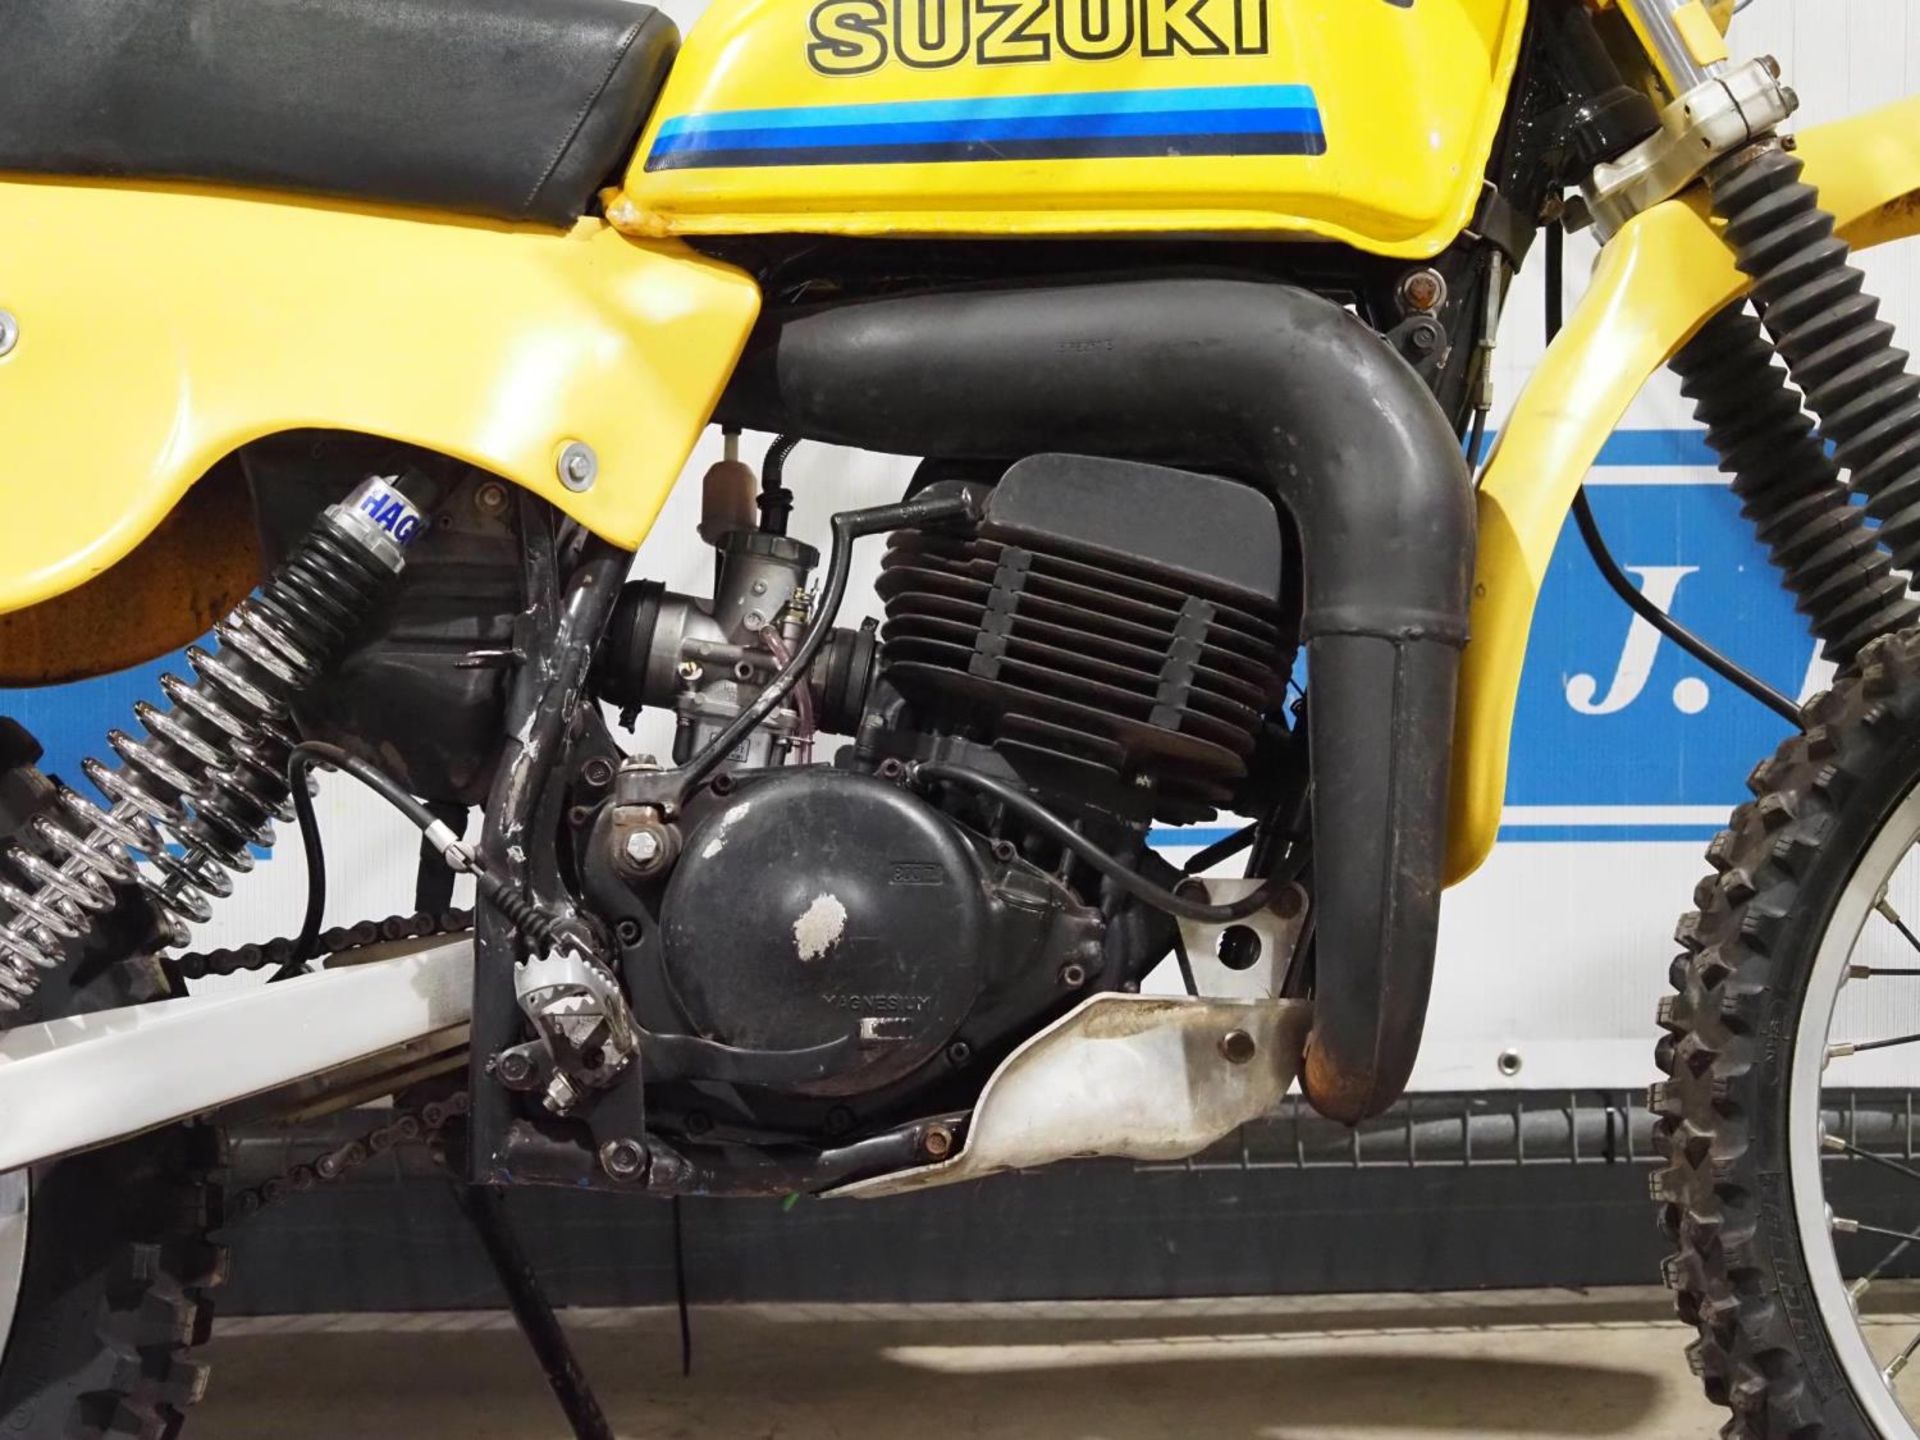 Suzuki PE400 motorcycle. 398cc. 1981. Runs and rides. Matching numbers. Reg. UBC 245X. V5 and key - Image 2 of 6